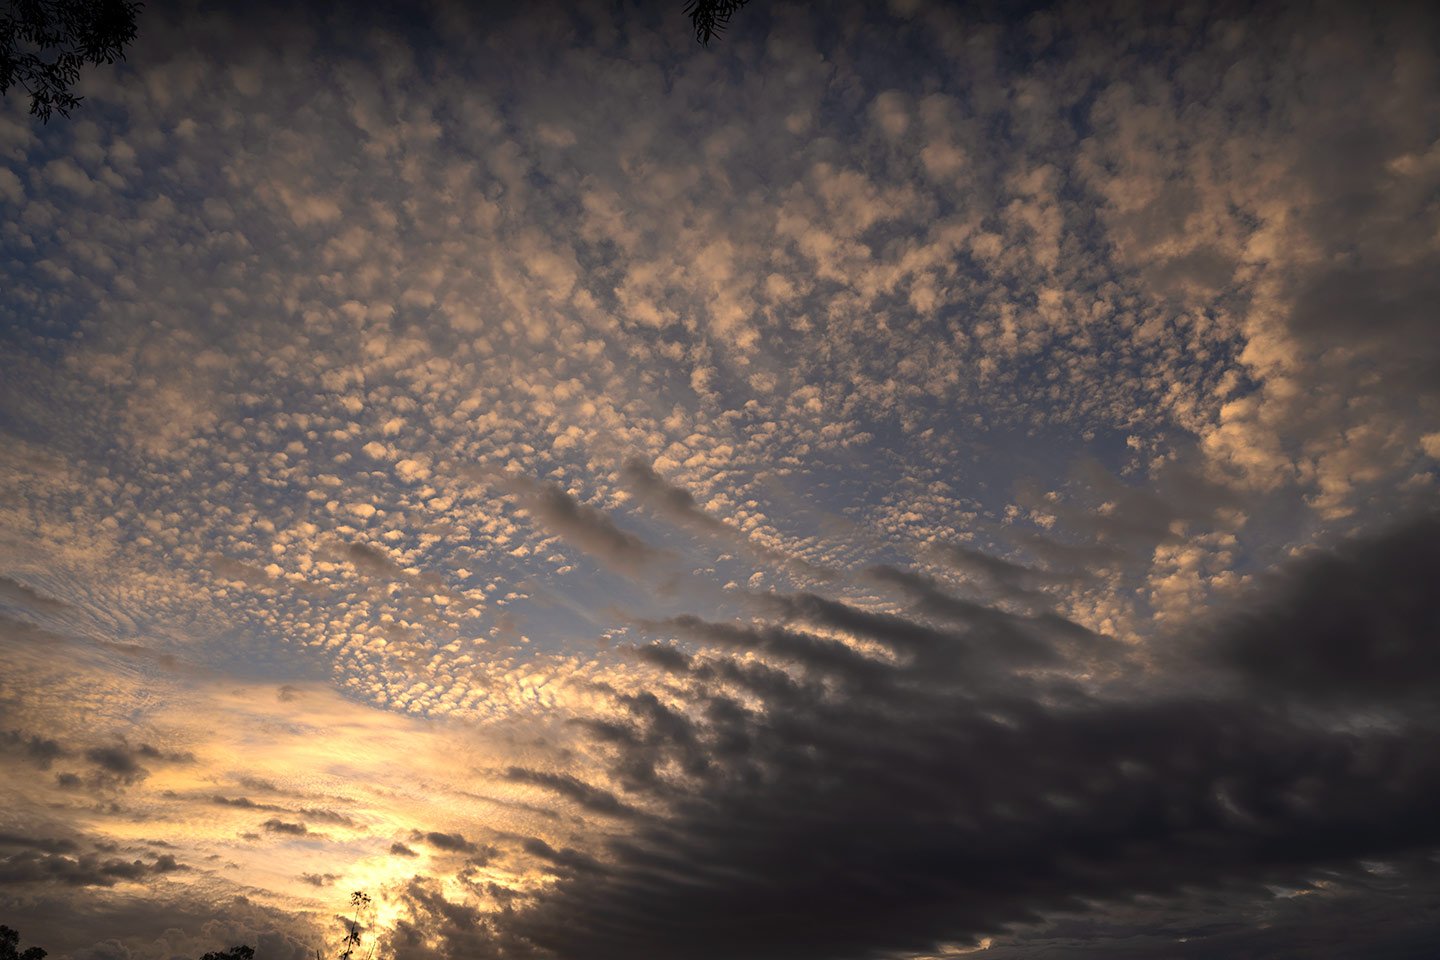 Sunrise-with-big-big-clouds-Copyright-Warren-Hinder-2021.jpg